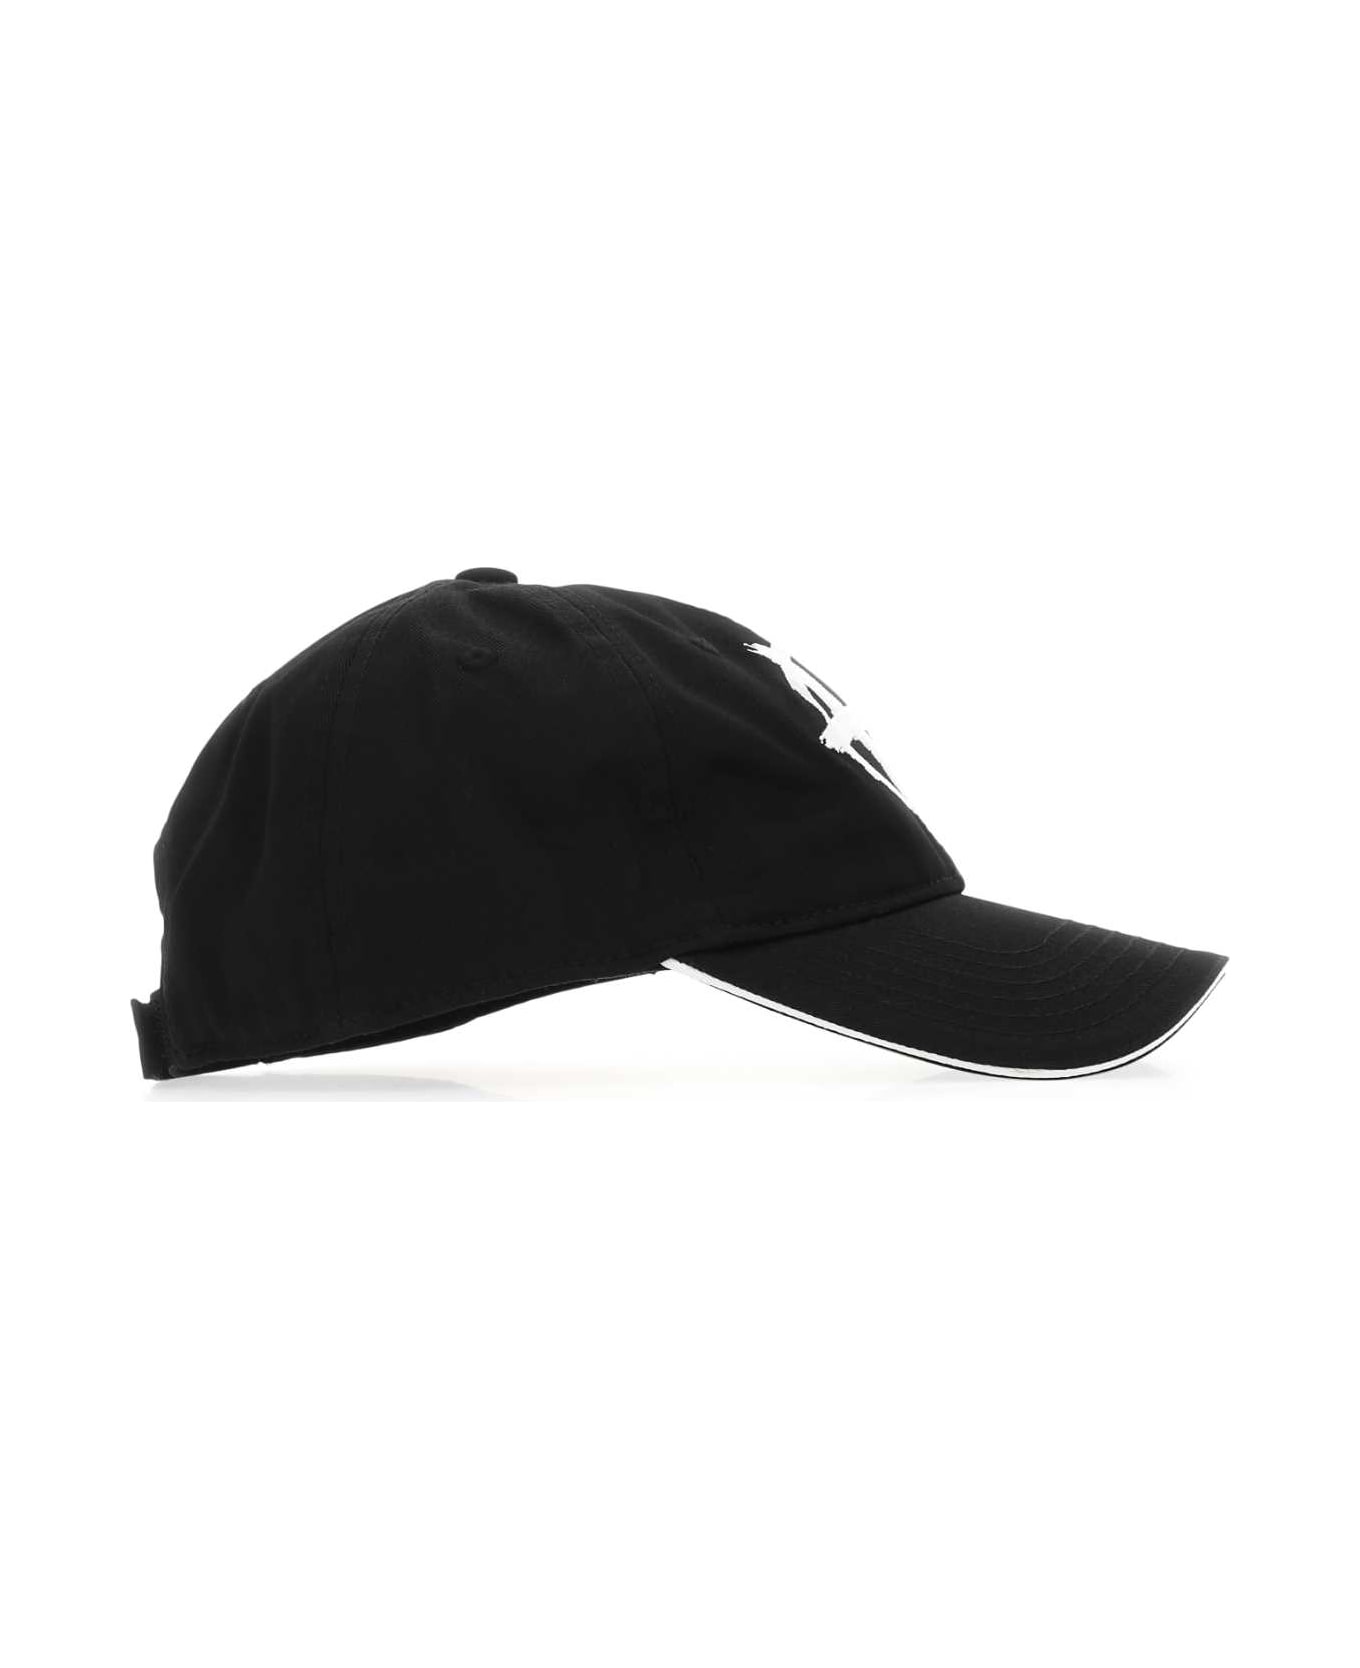 Black Cotton Baseball Cap - 2